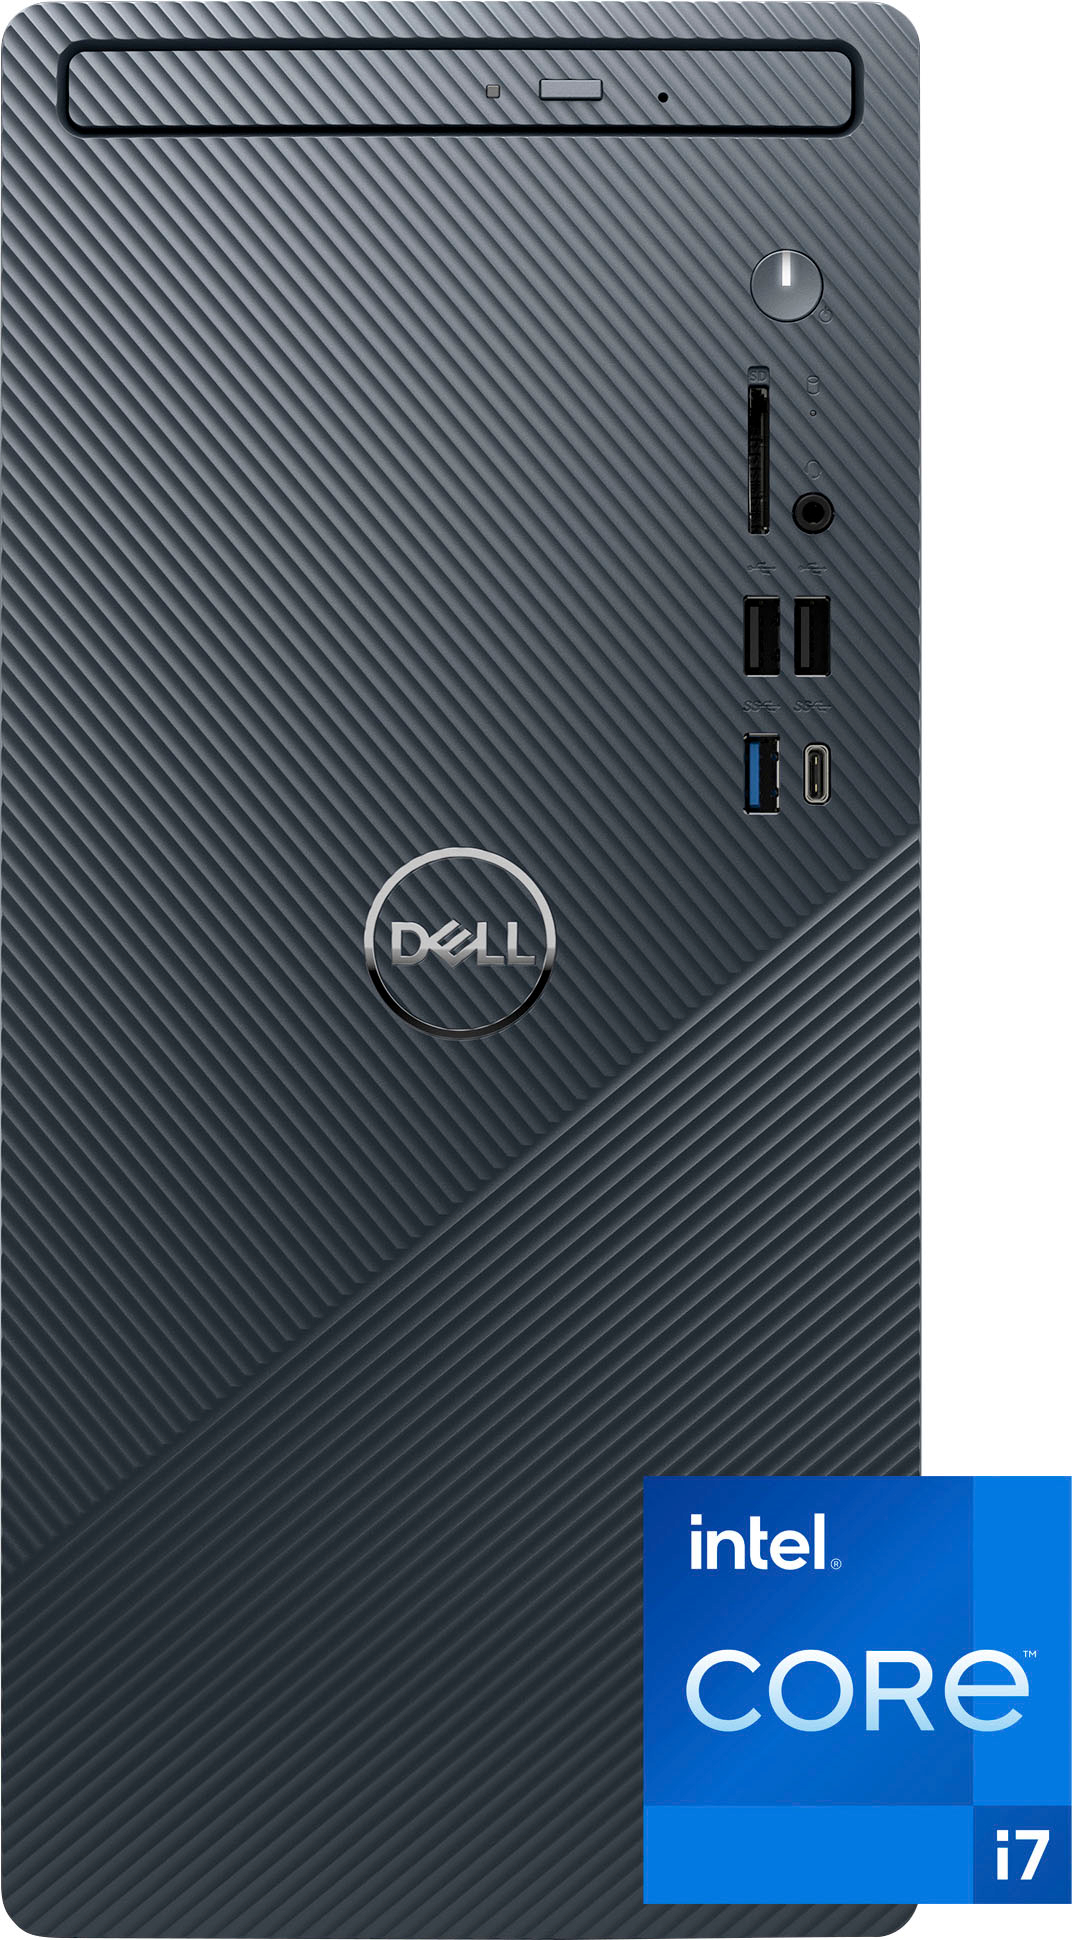 Dell Inspiron 3020 Desktop 13th Gen Intel Core i7 16GB Memory 